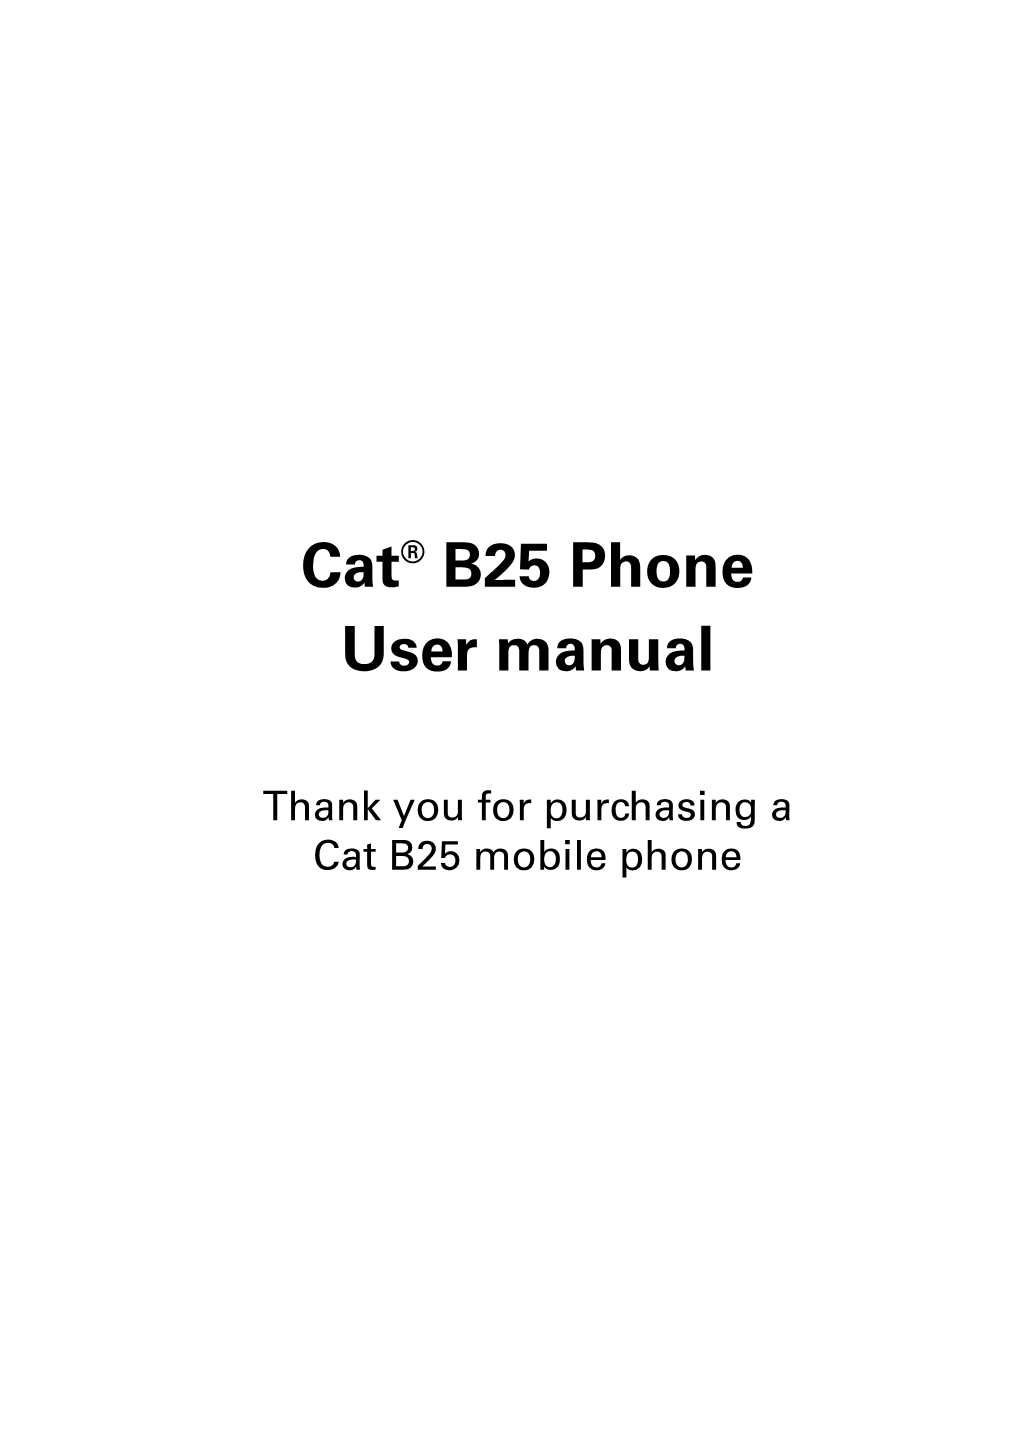 Cat® B25 Phone User Manual